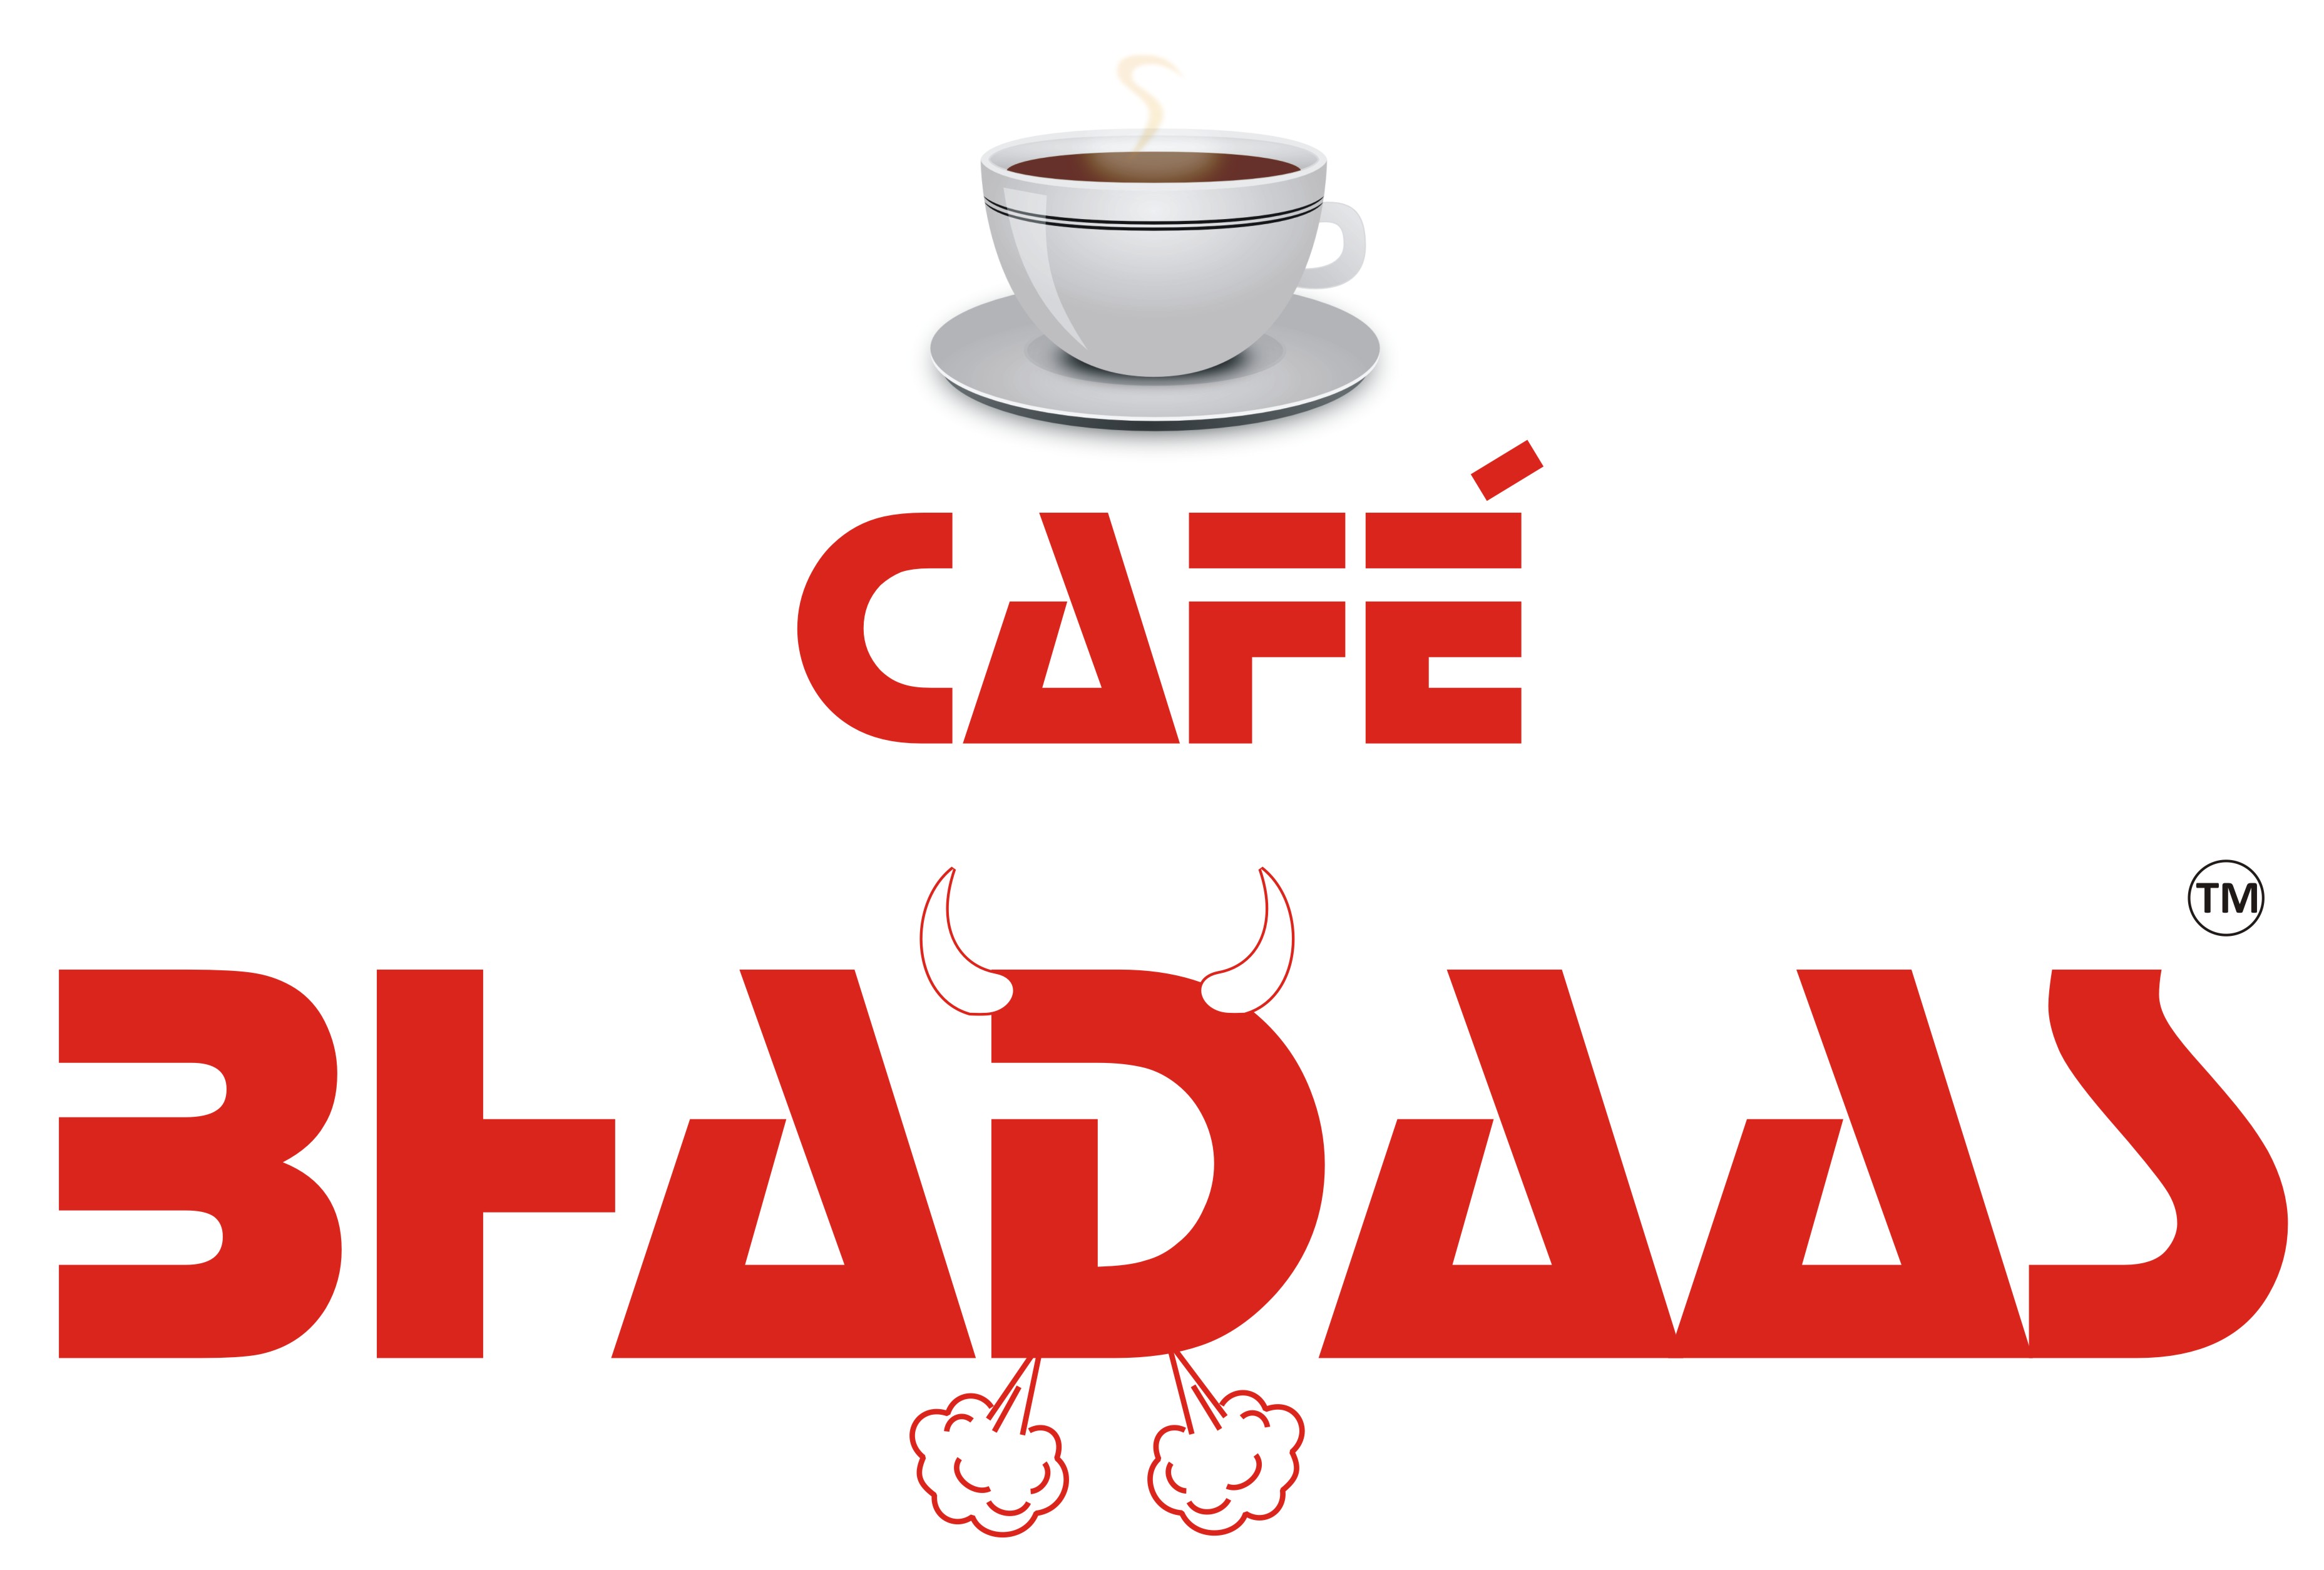 Bhadaas Cafe